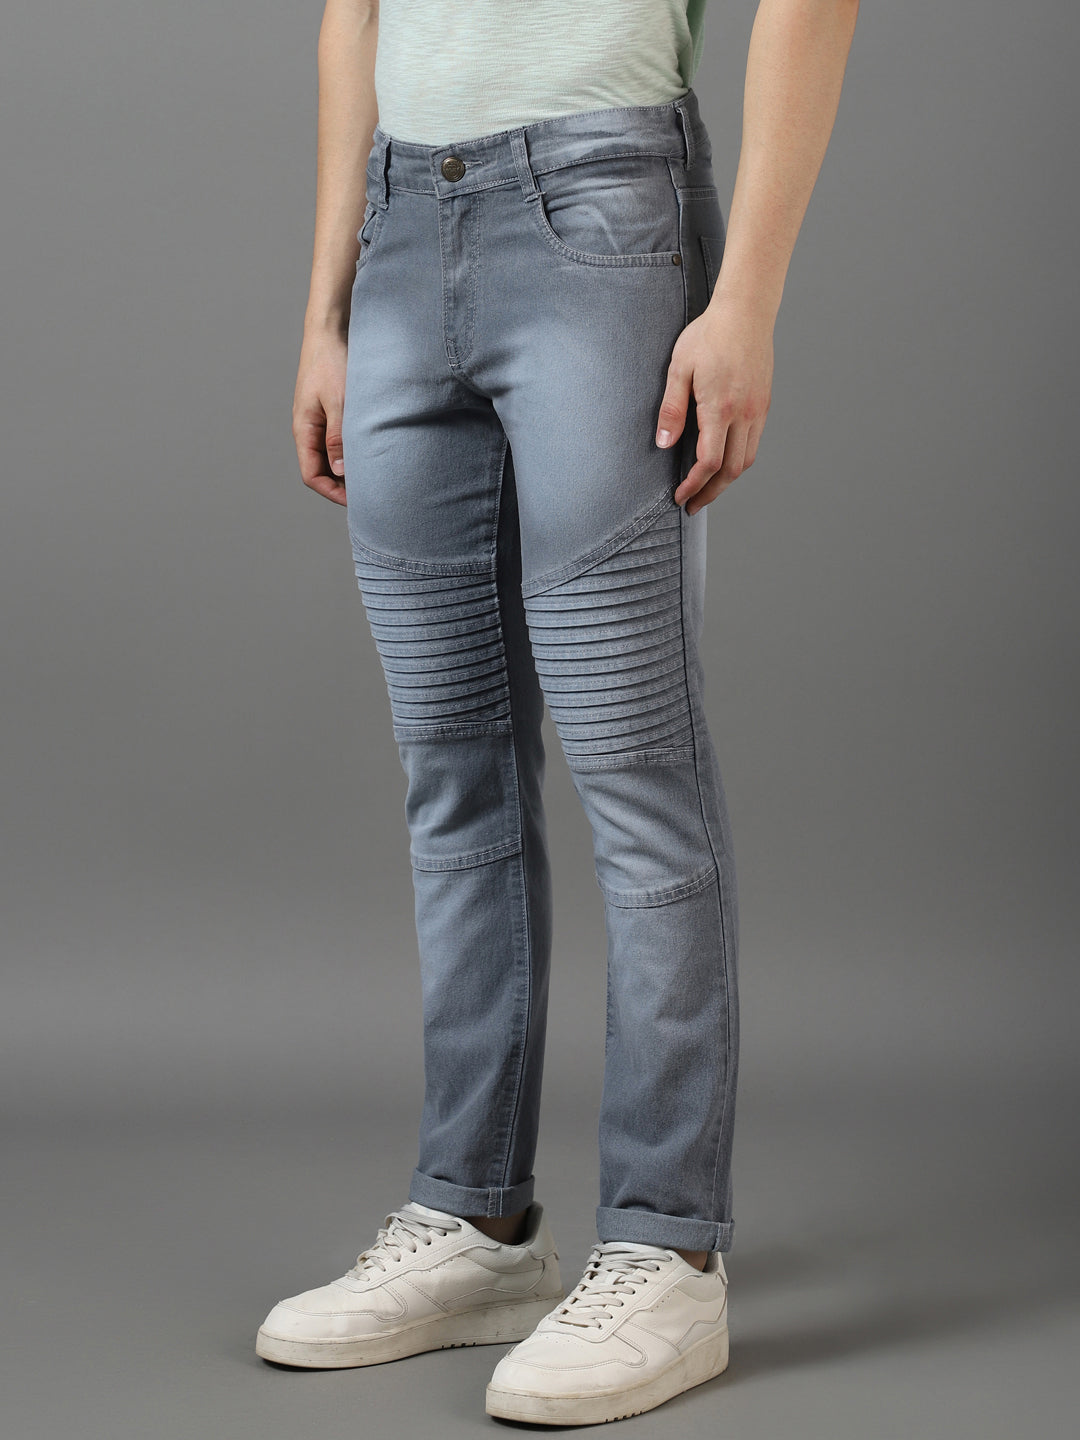 Urbano Fashion Men's Light Grey Slim Fit Jeans Stretchable